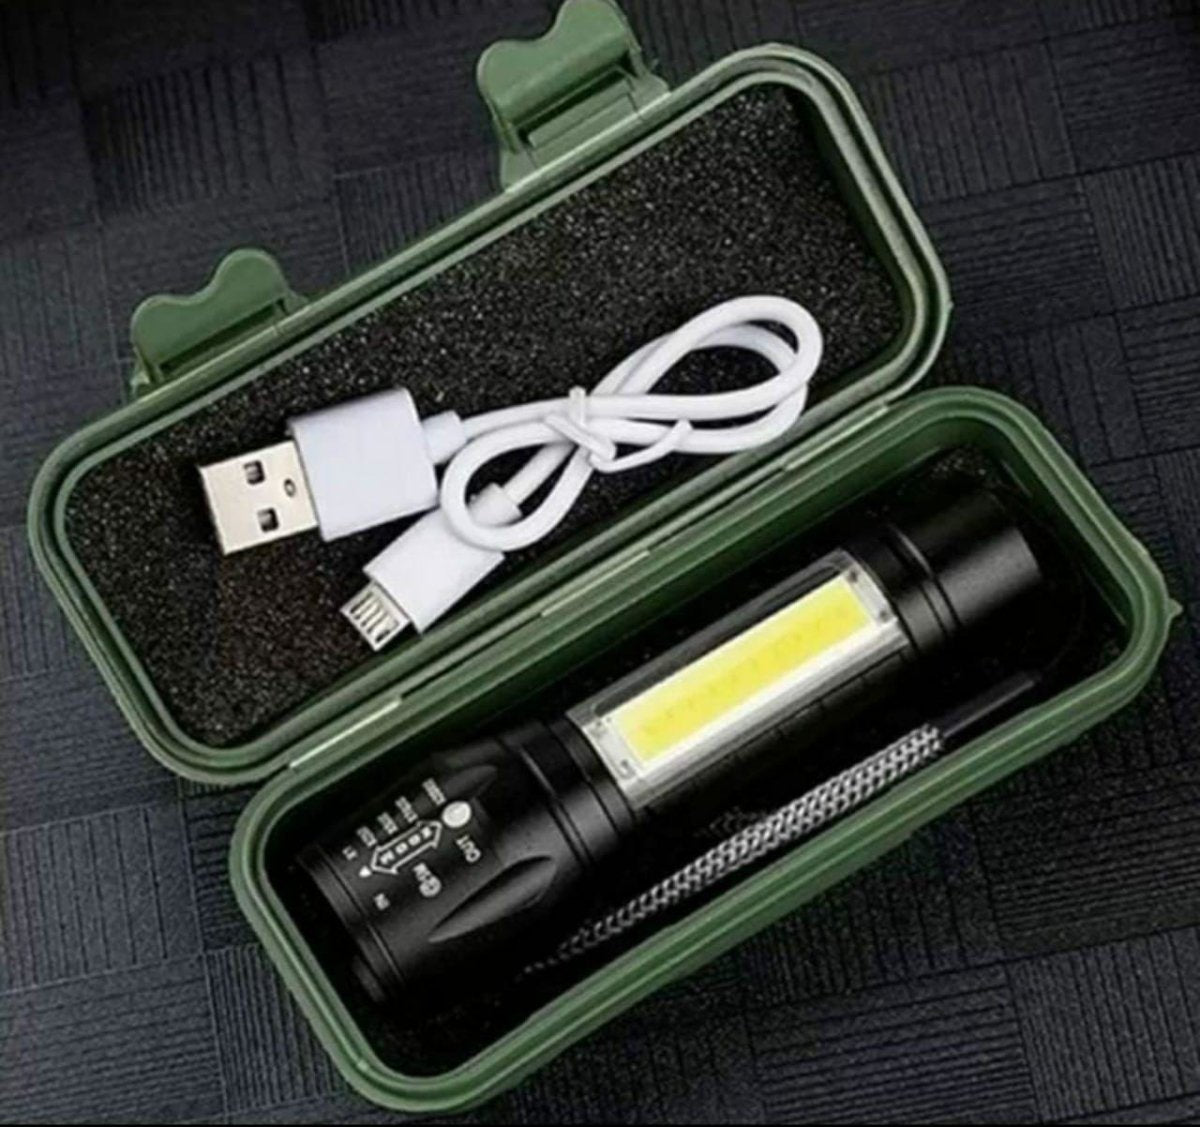 2000LM Waterproof Flashlight Built in Battery USB Charging